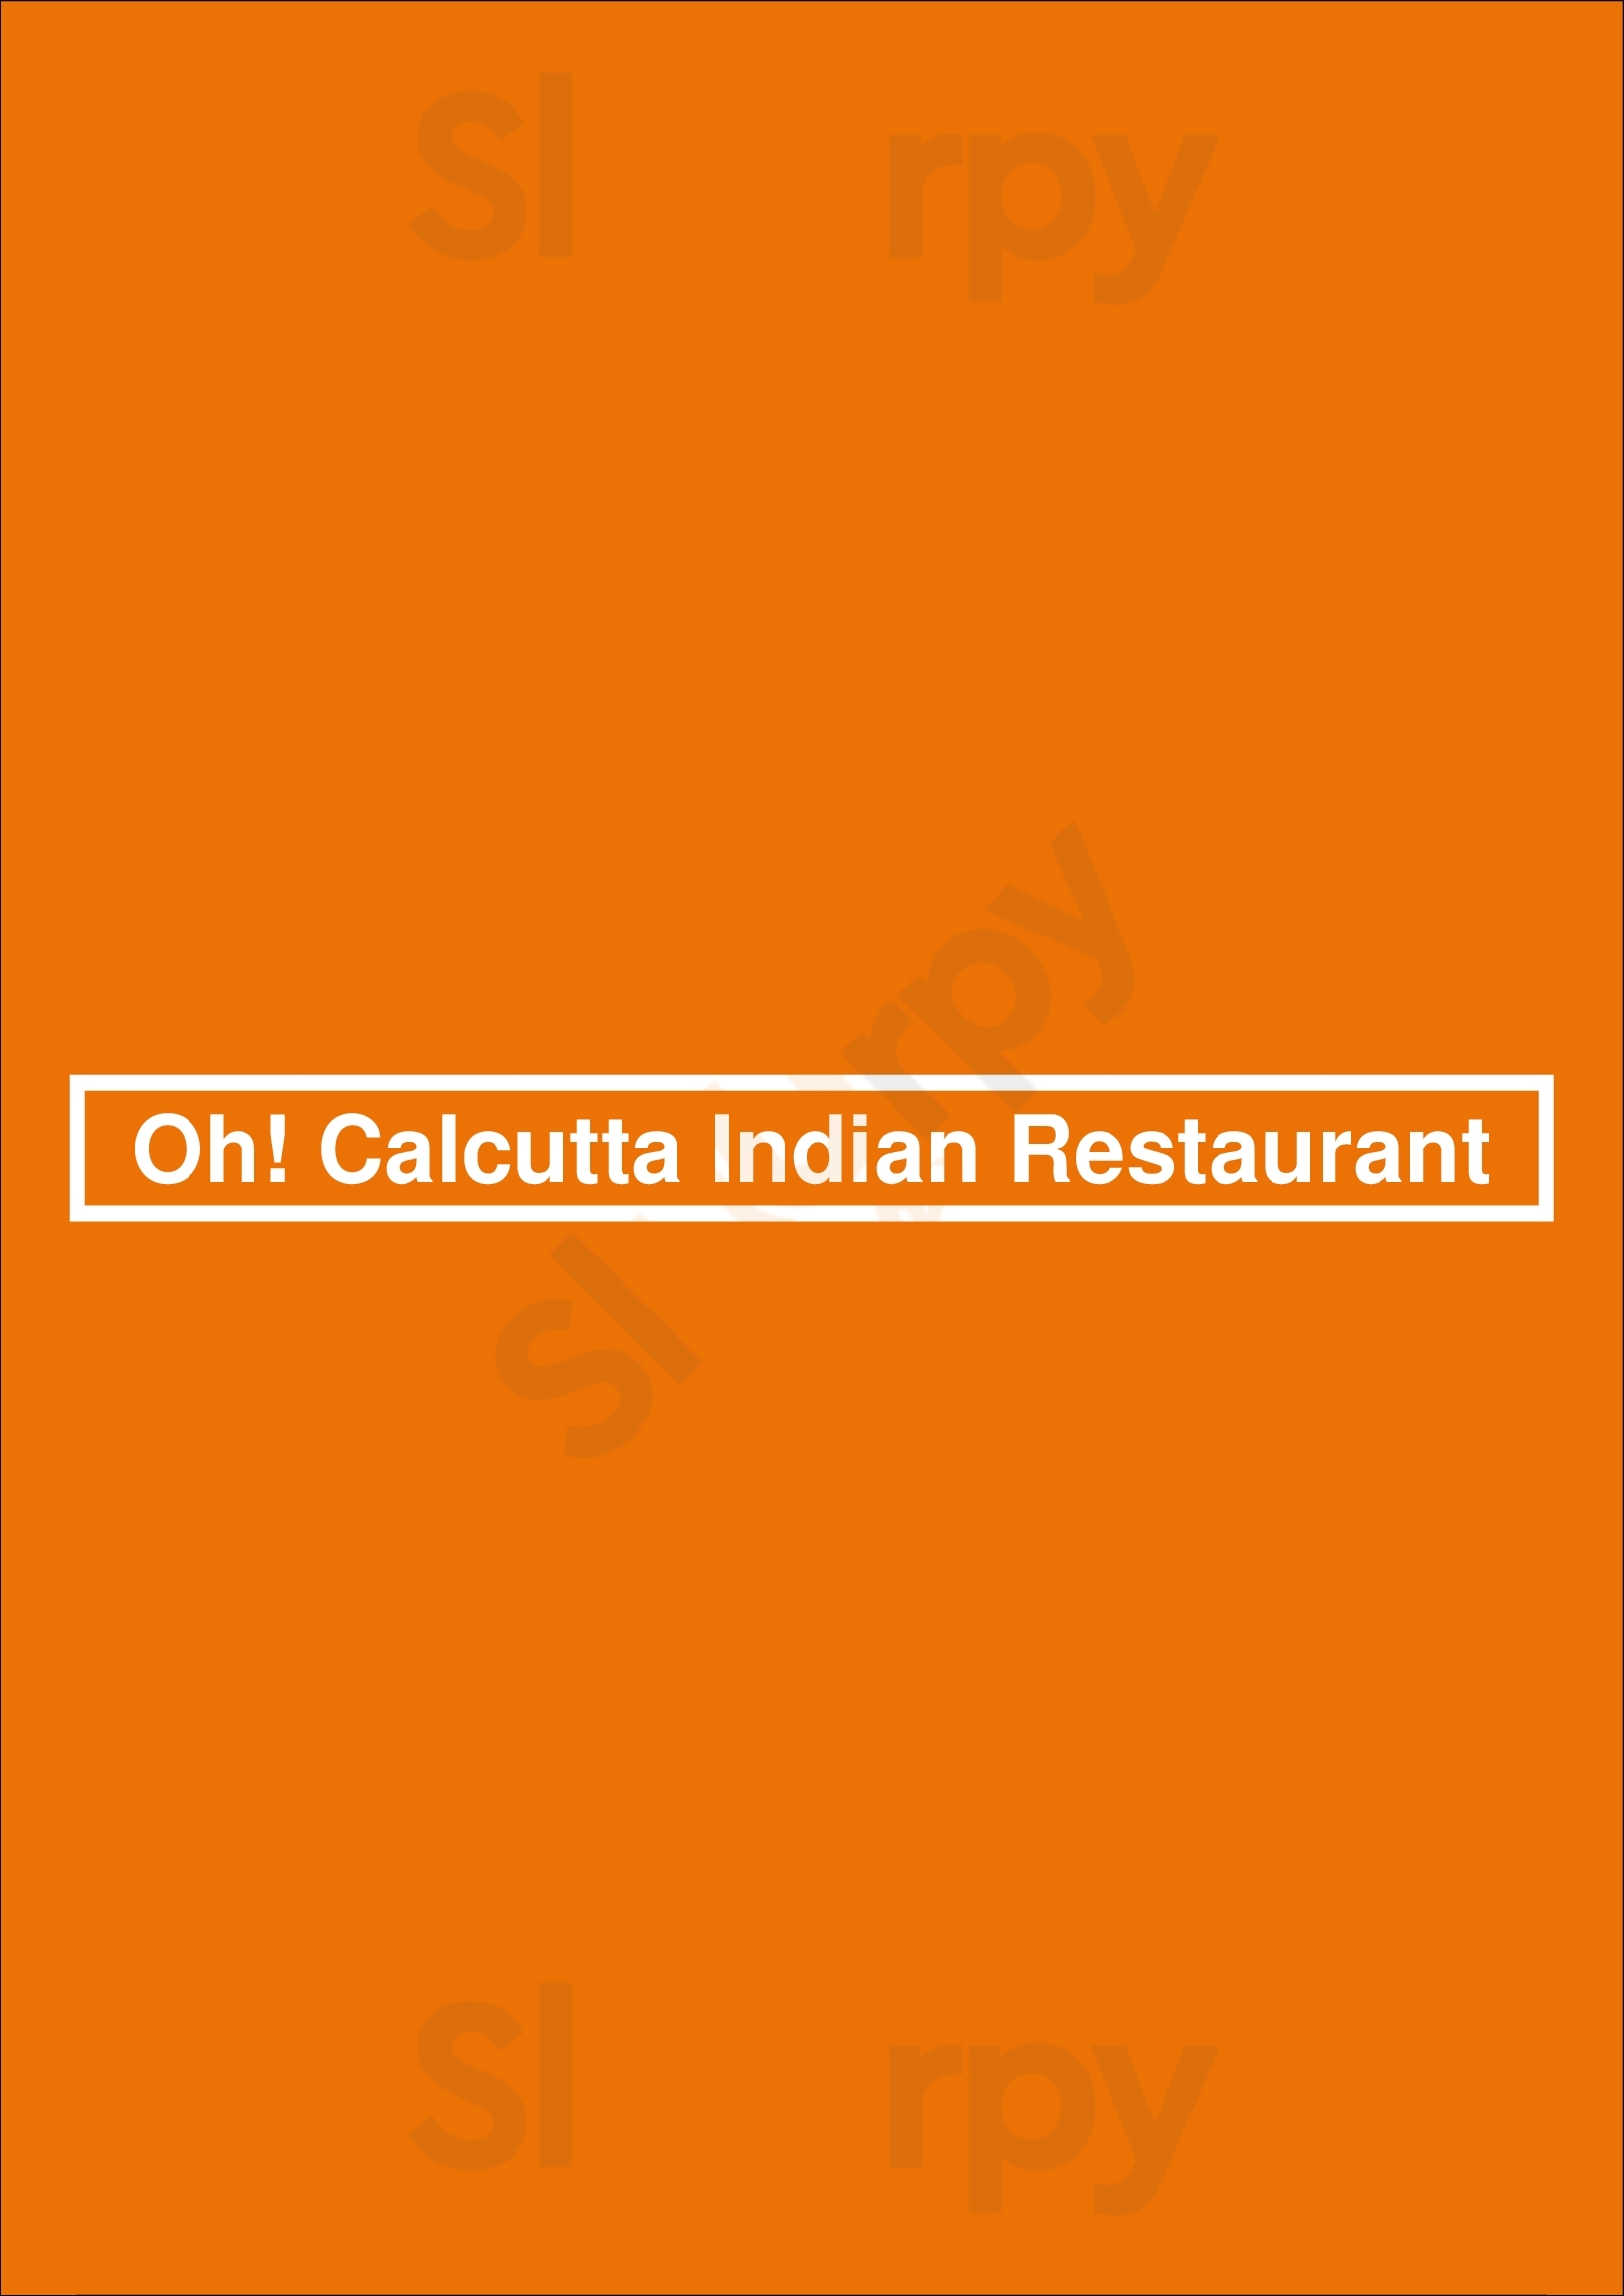 Oh! Calcutta Indian Restaurant Glenelg Menu - 1